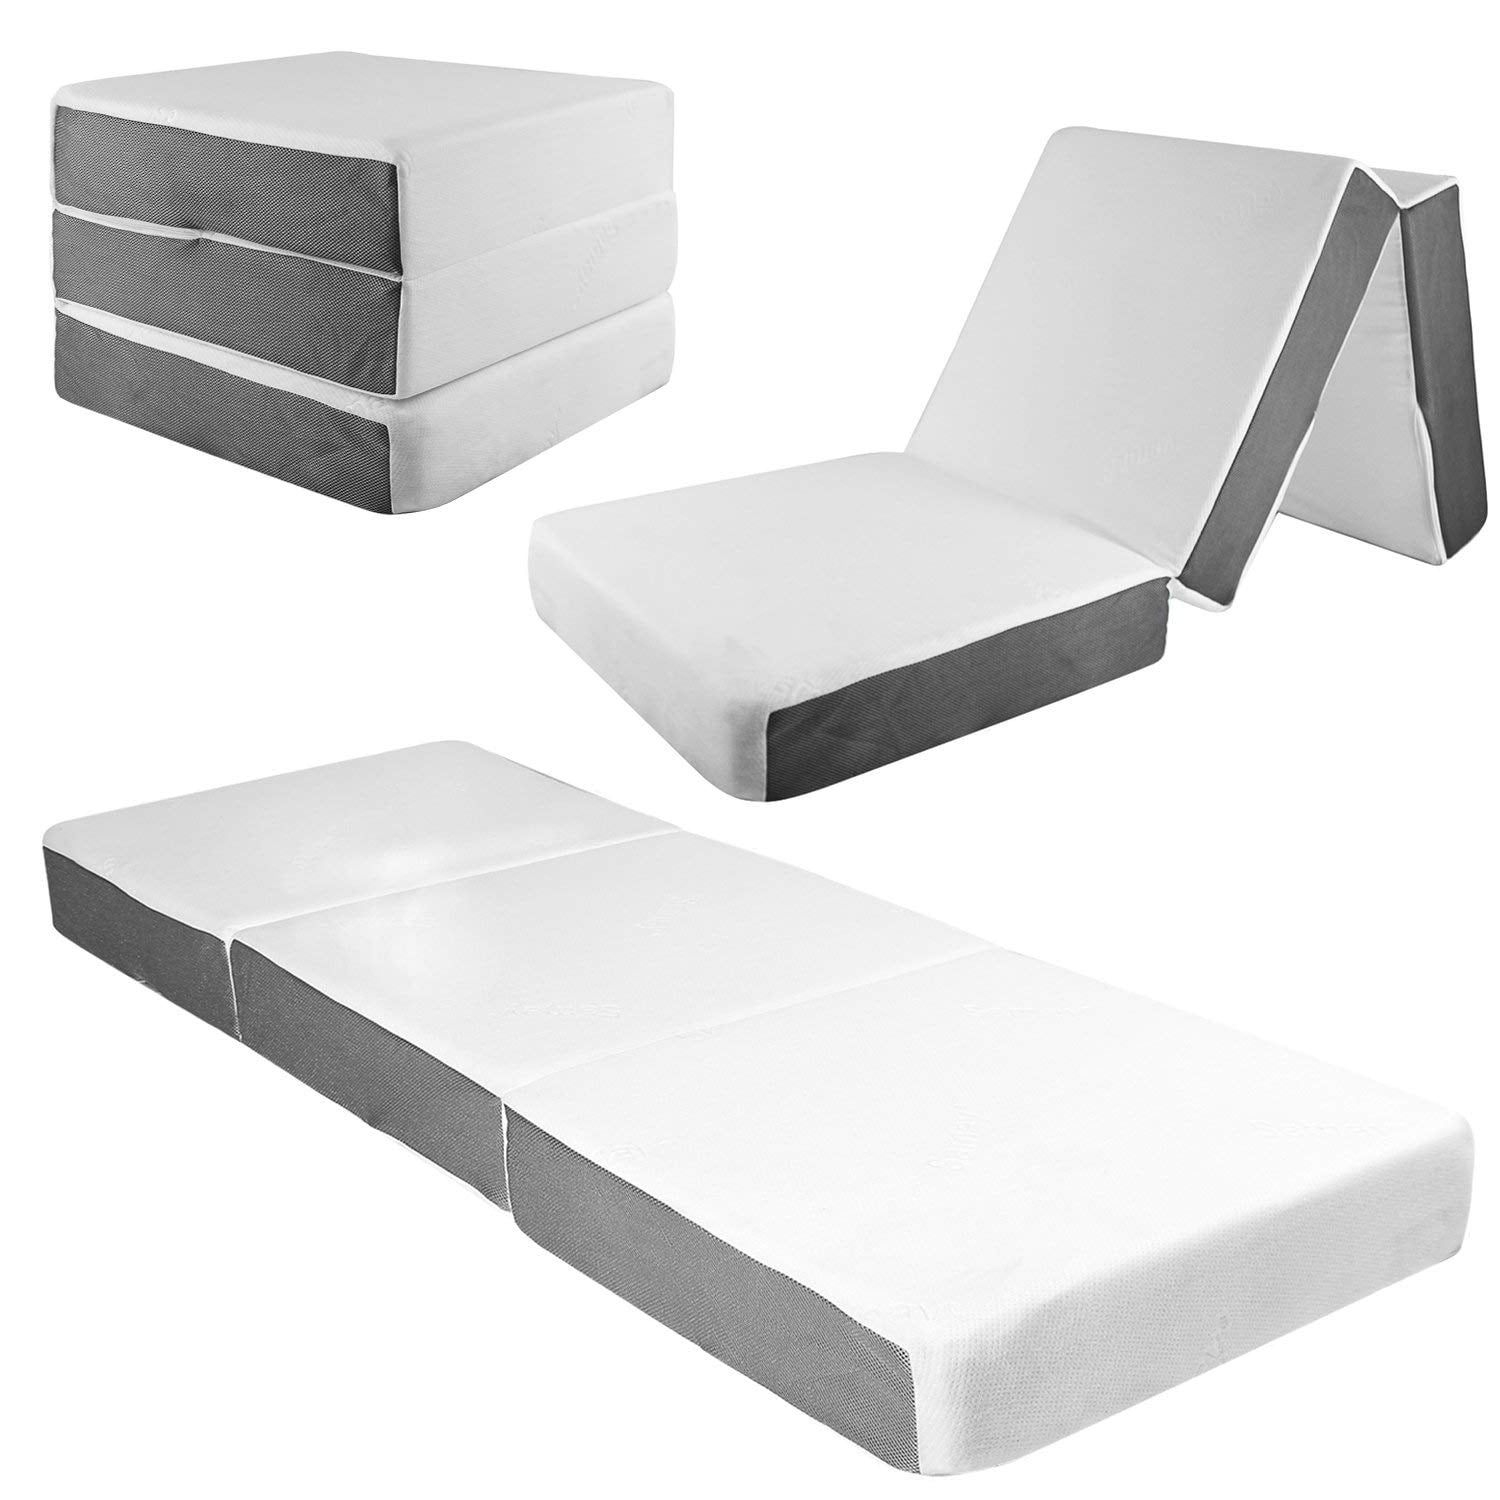 Folding Portable Mattress Washable Cover 6-Inch Memory Foam Tri-Folding Sofa Bed 